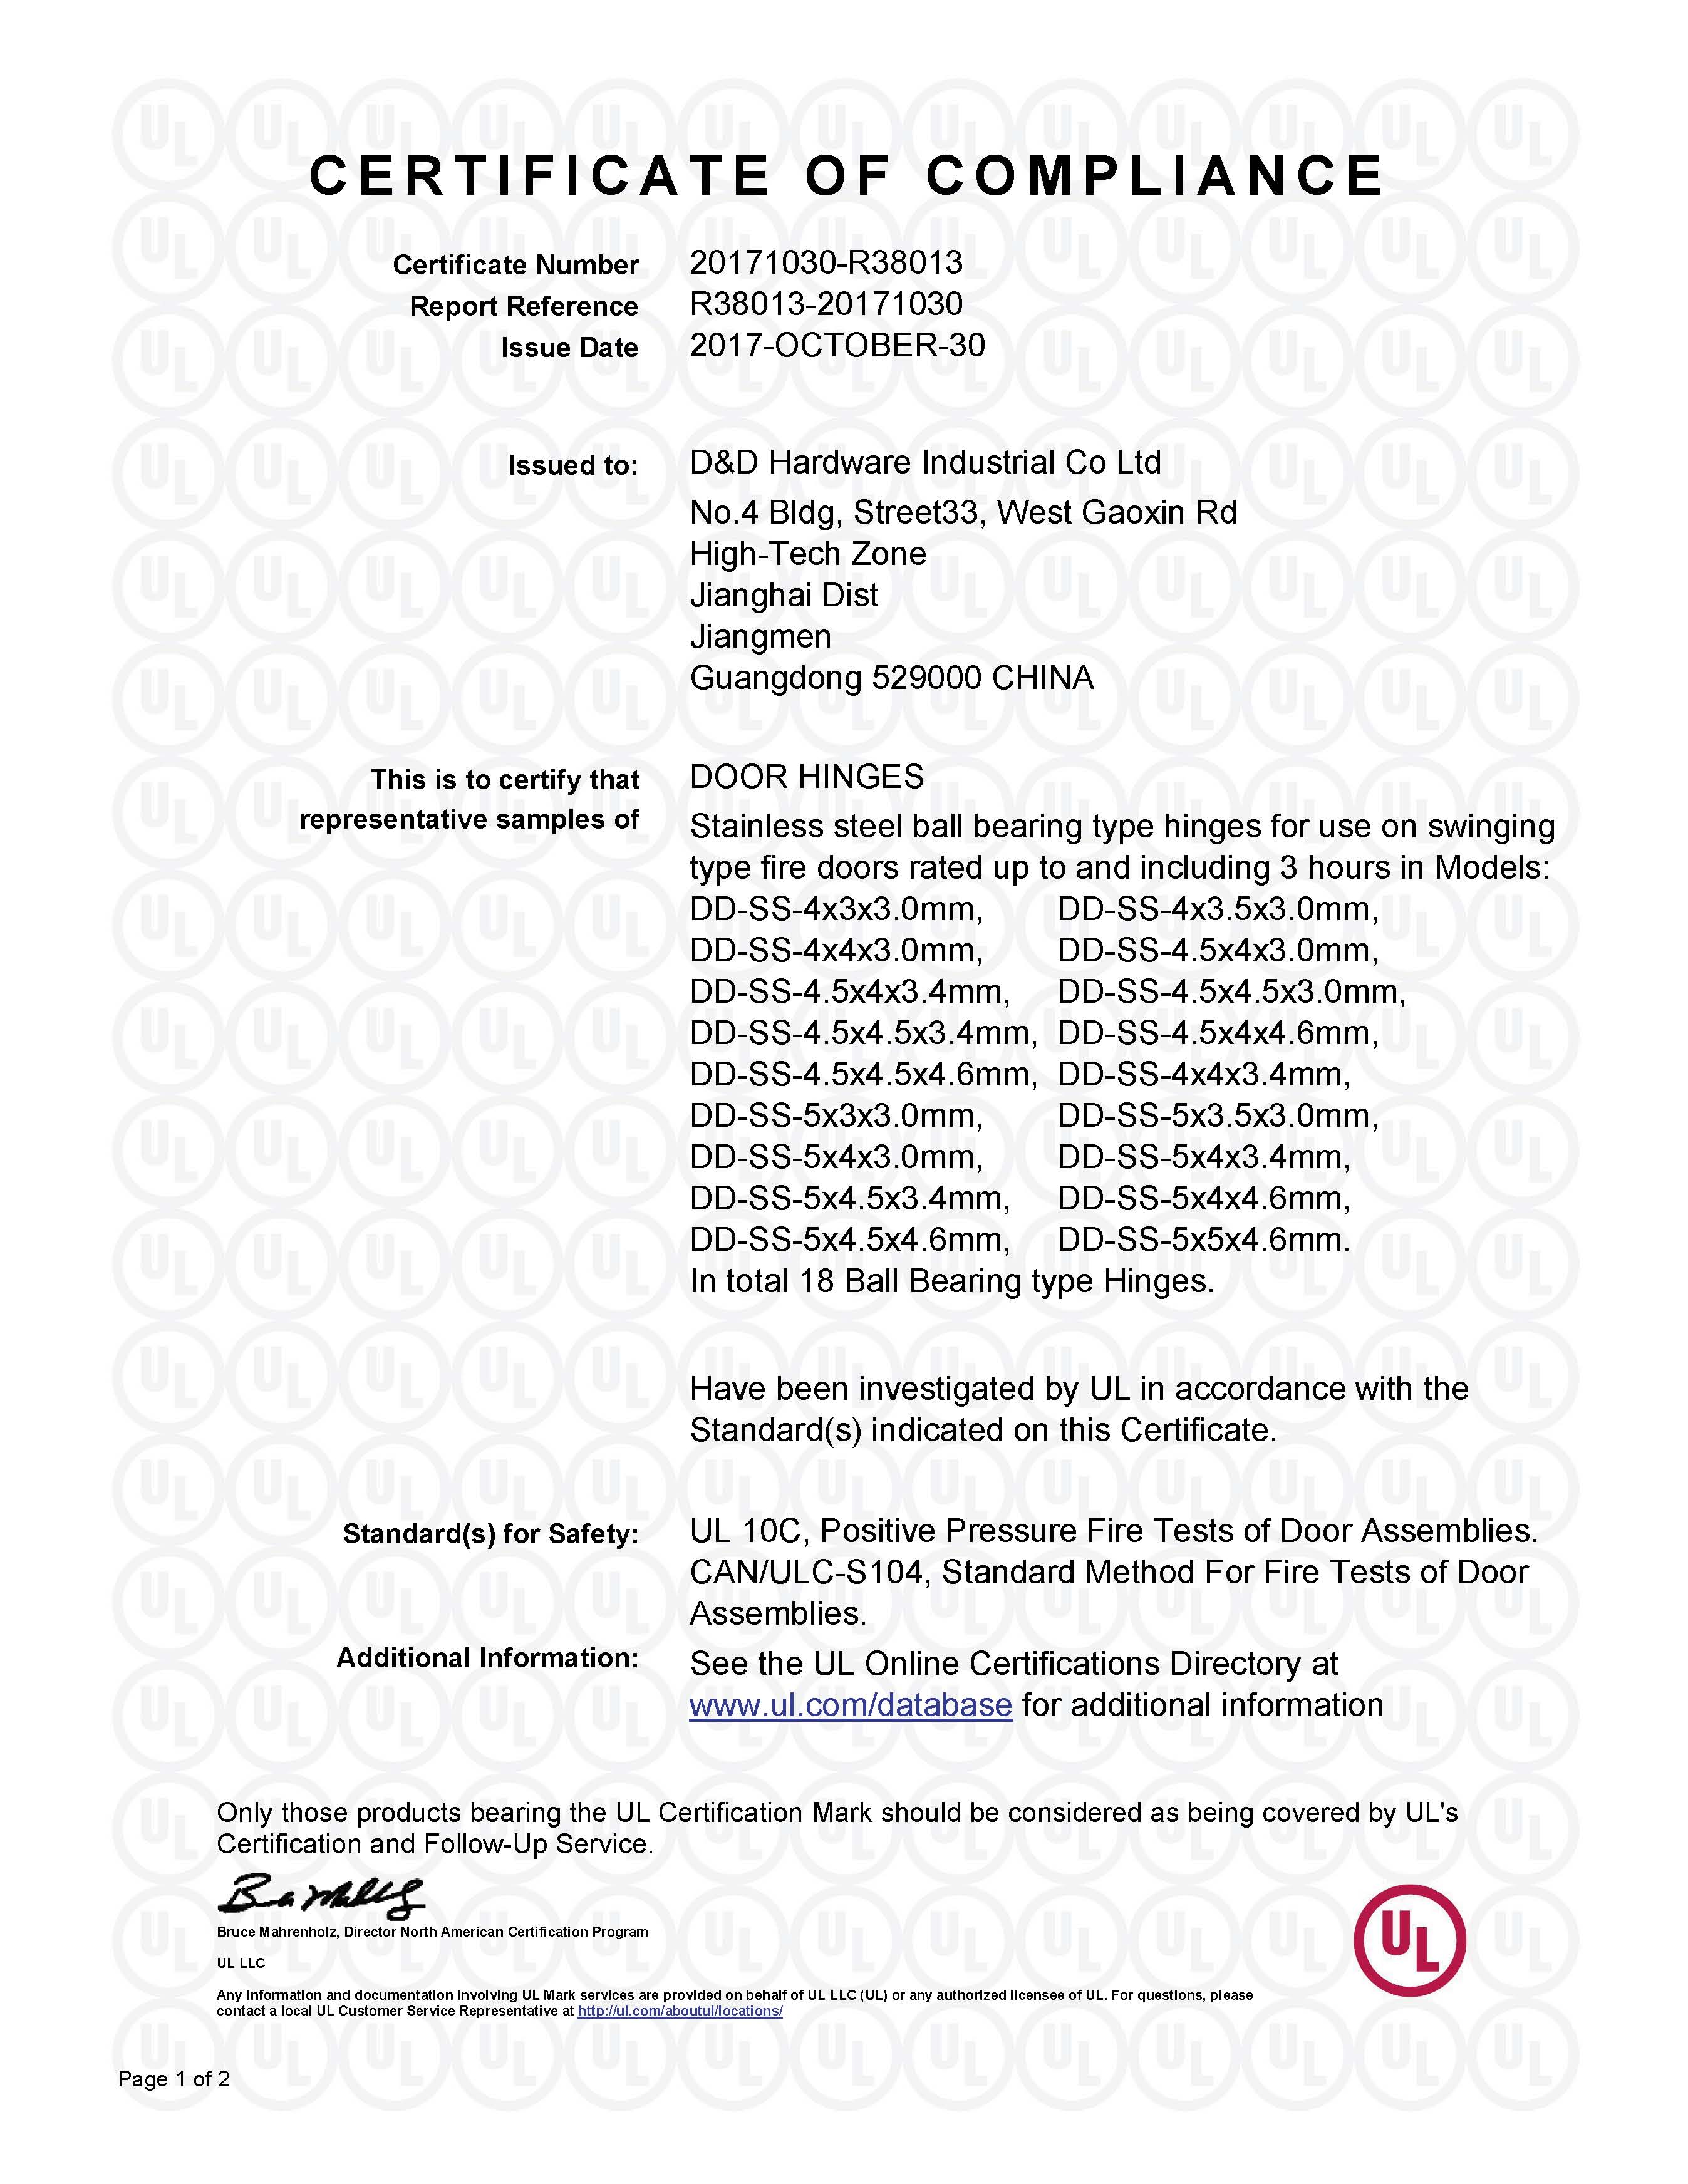 D&D UL Hinge-R38013 certificate